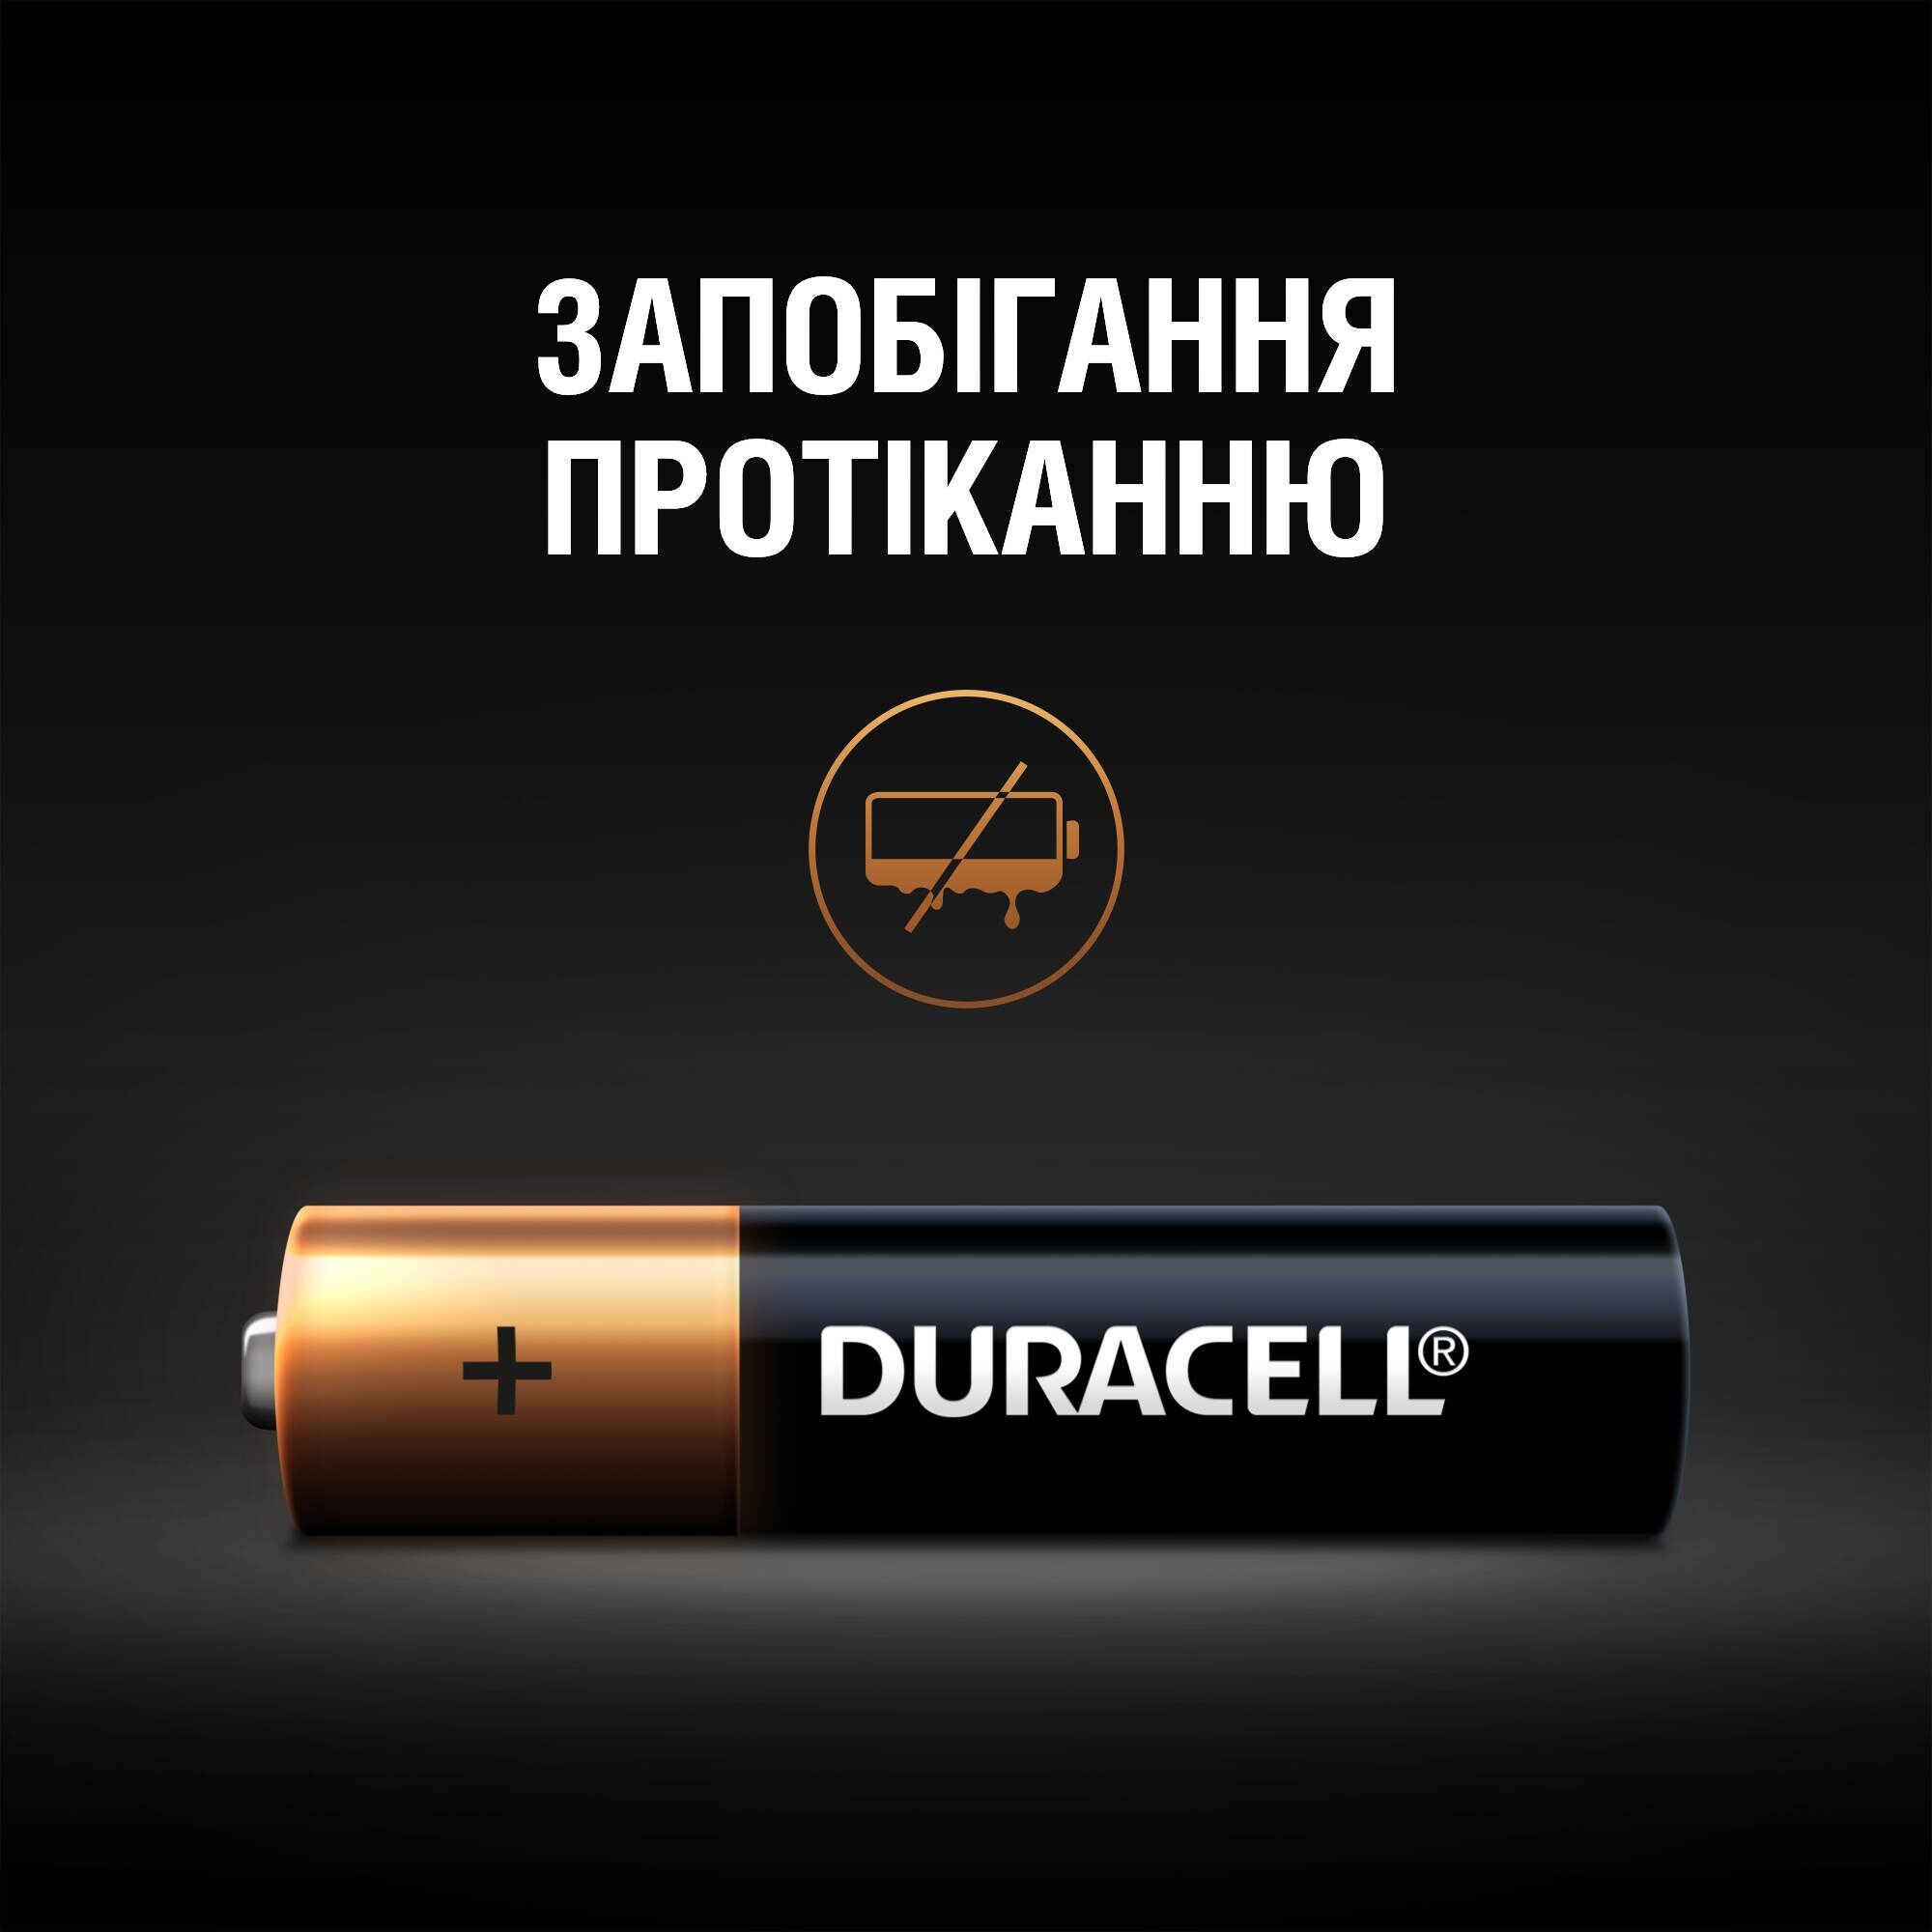 Щелочные батарейки мизинчиковые Duracell 1.5 V AAA LR03/MN2400, 8 шт. (706051) - фото 7